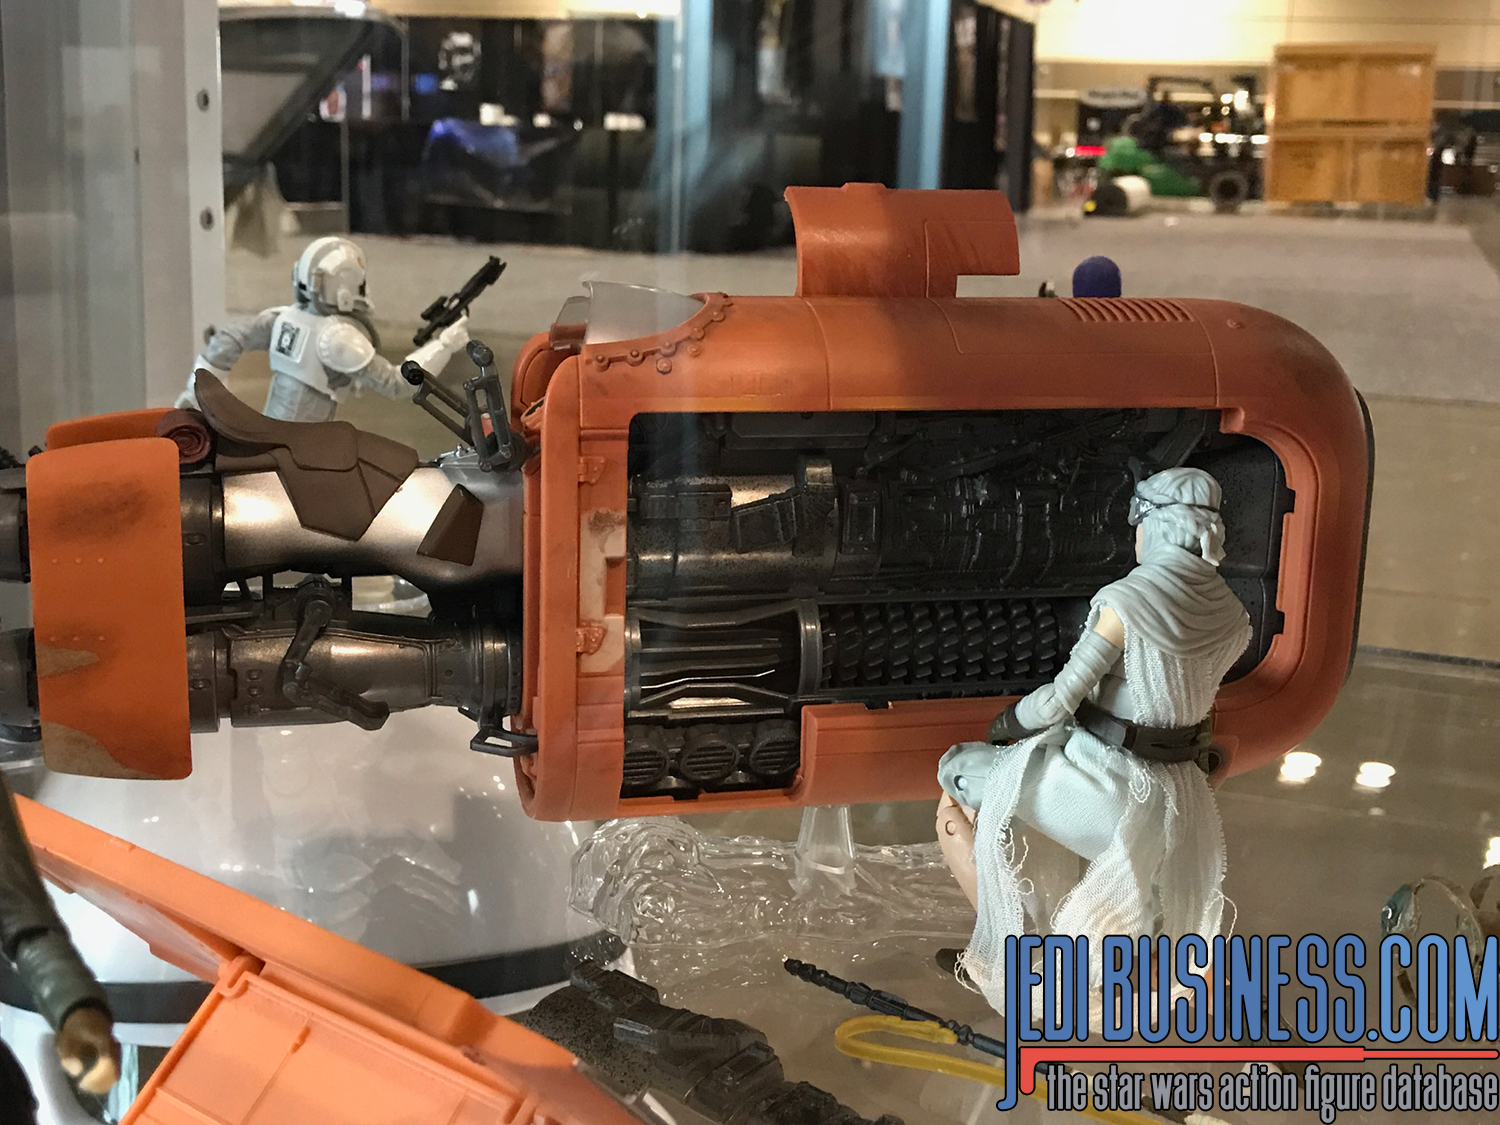 Star Wars Celebration Orlando 2017 - Hasbro Booth